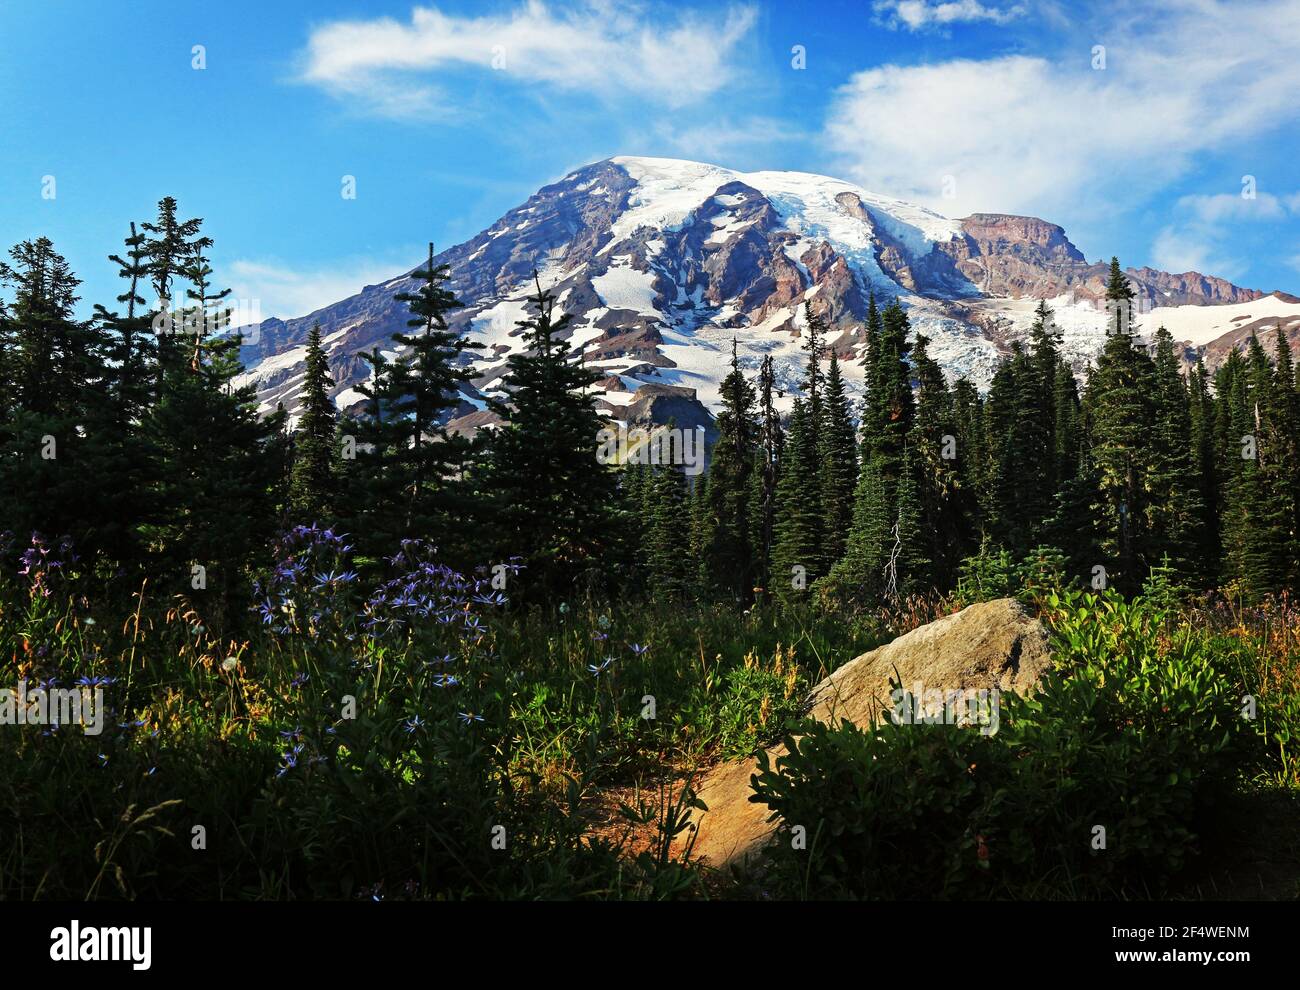 Mount Rainier in Washington state. Stock Photo